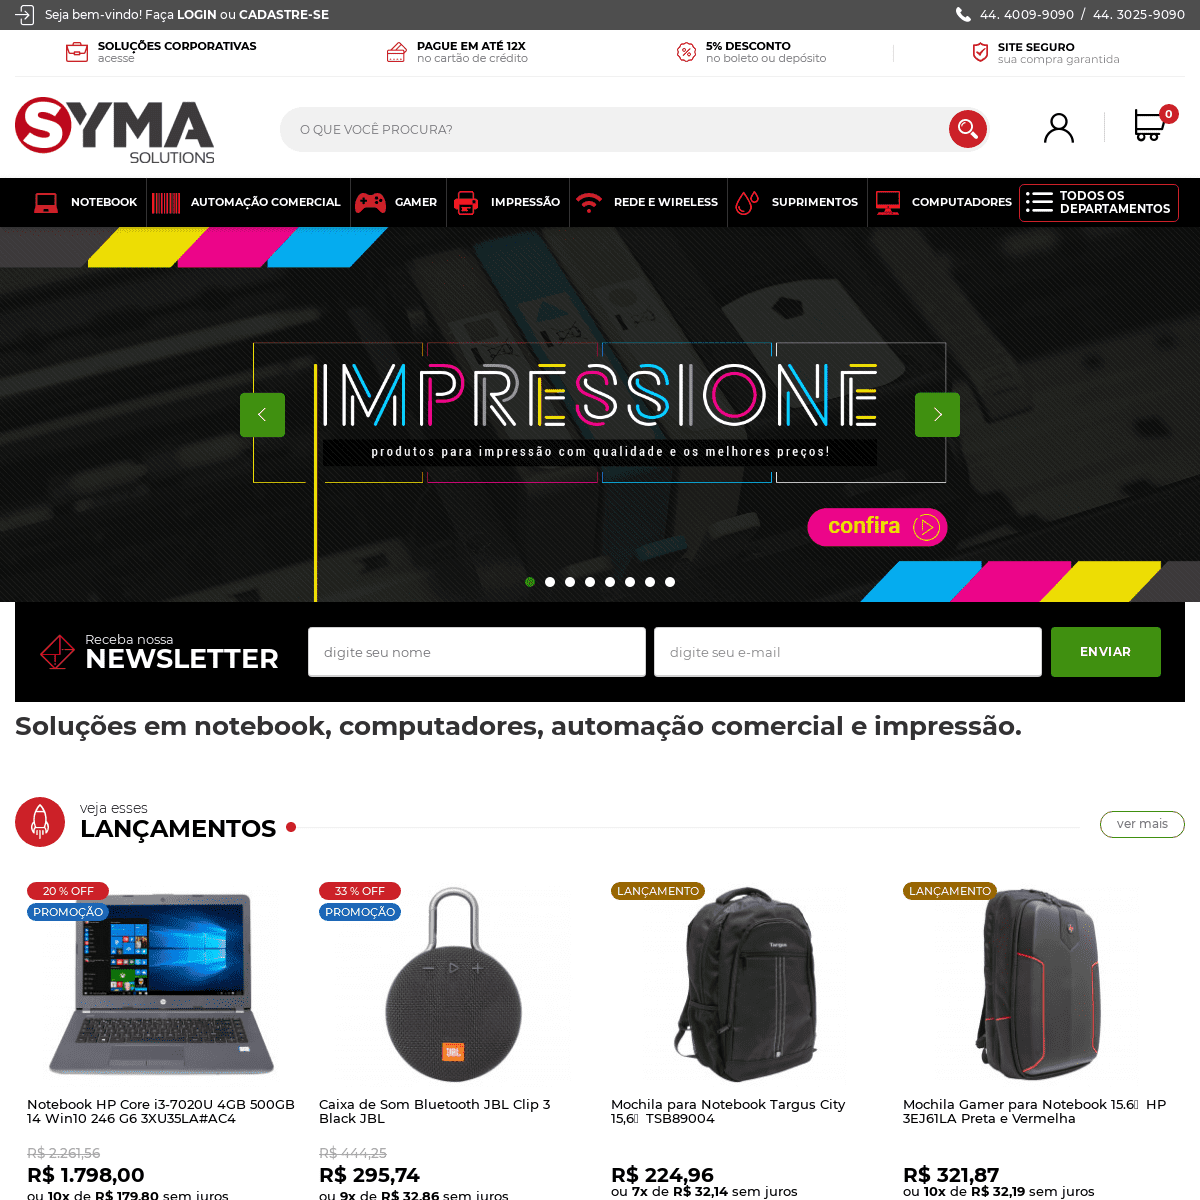 A complete backup of syma.com.br